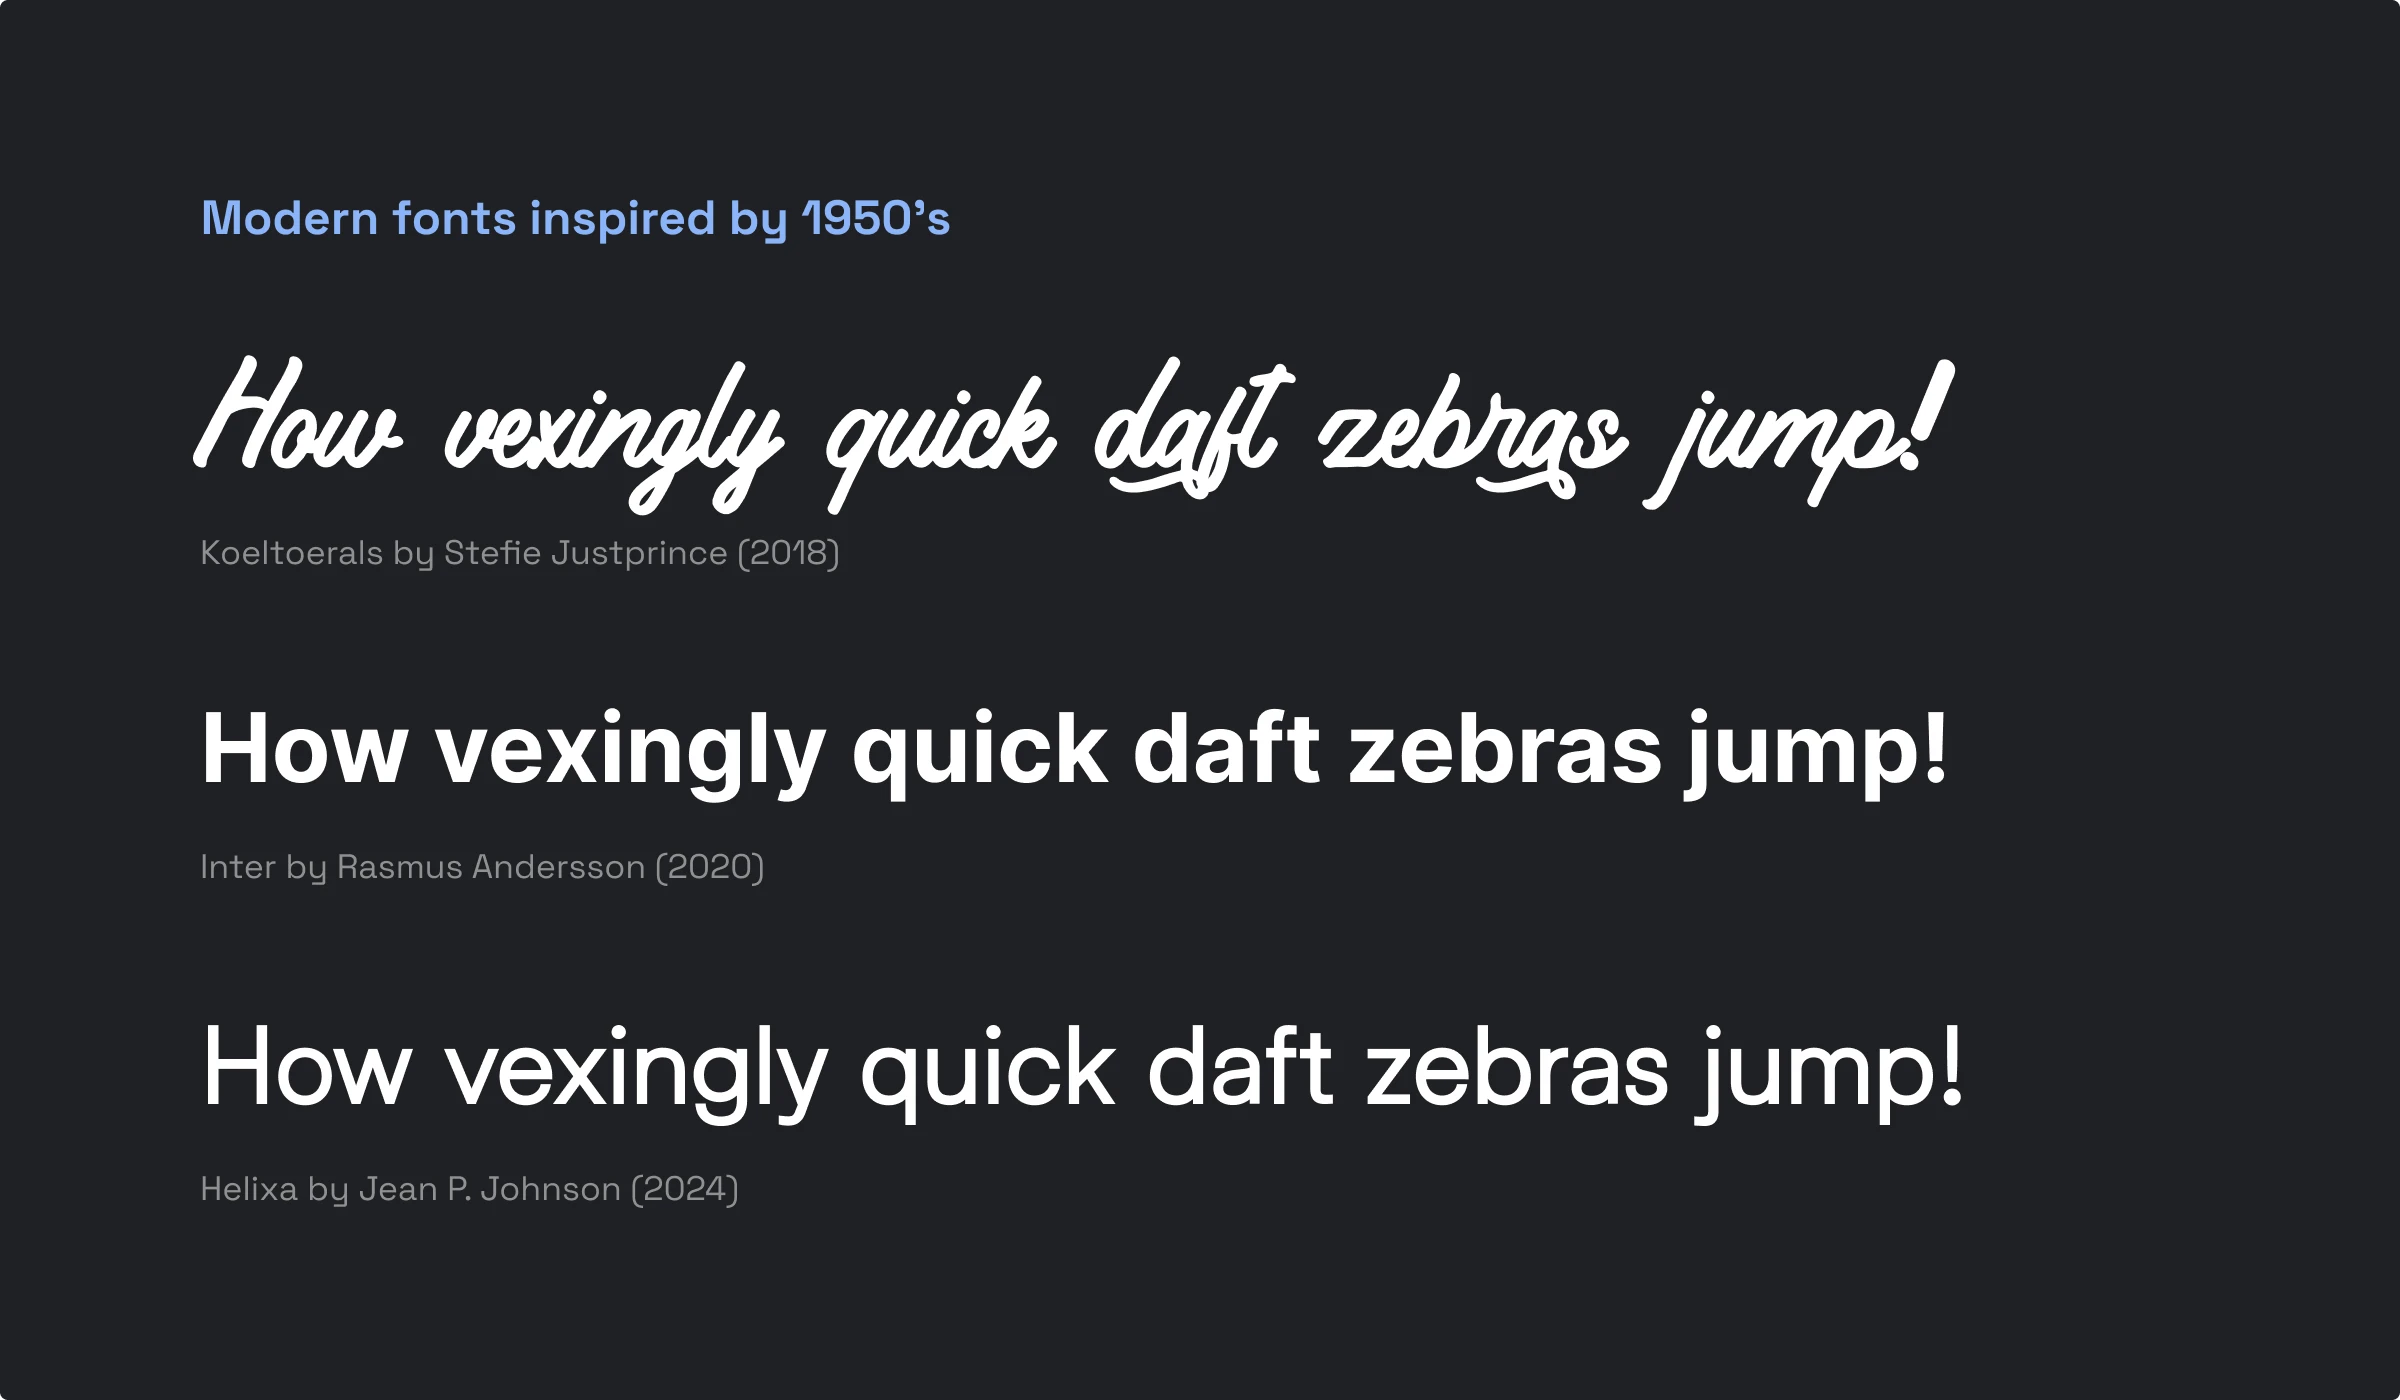 Modern fonts inspired 1950’s